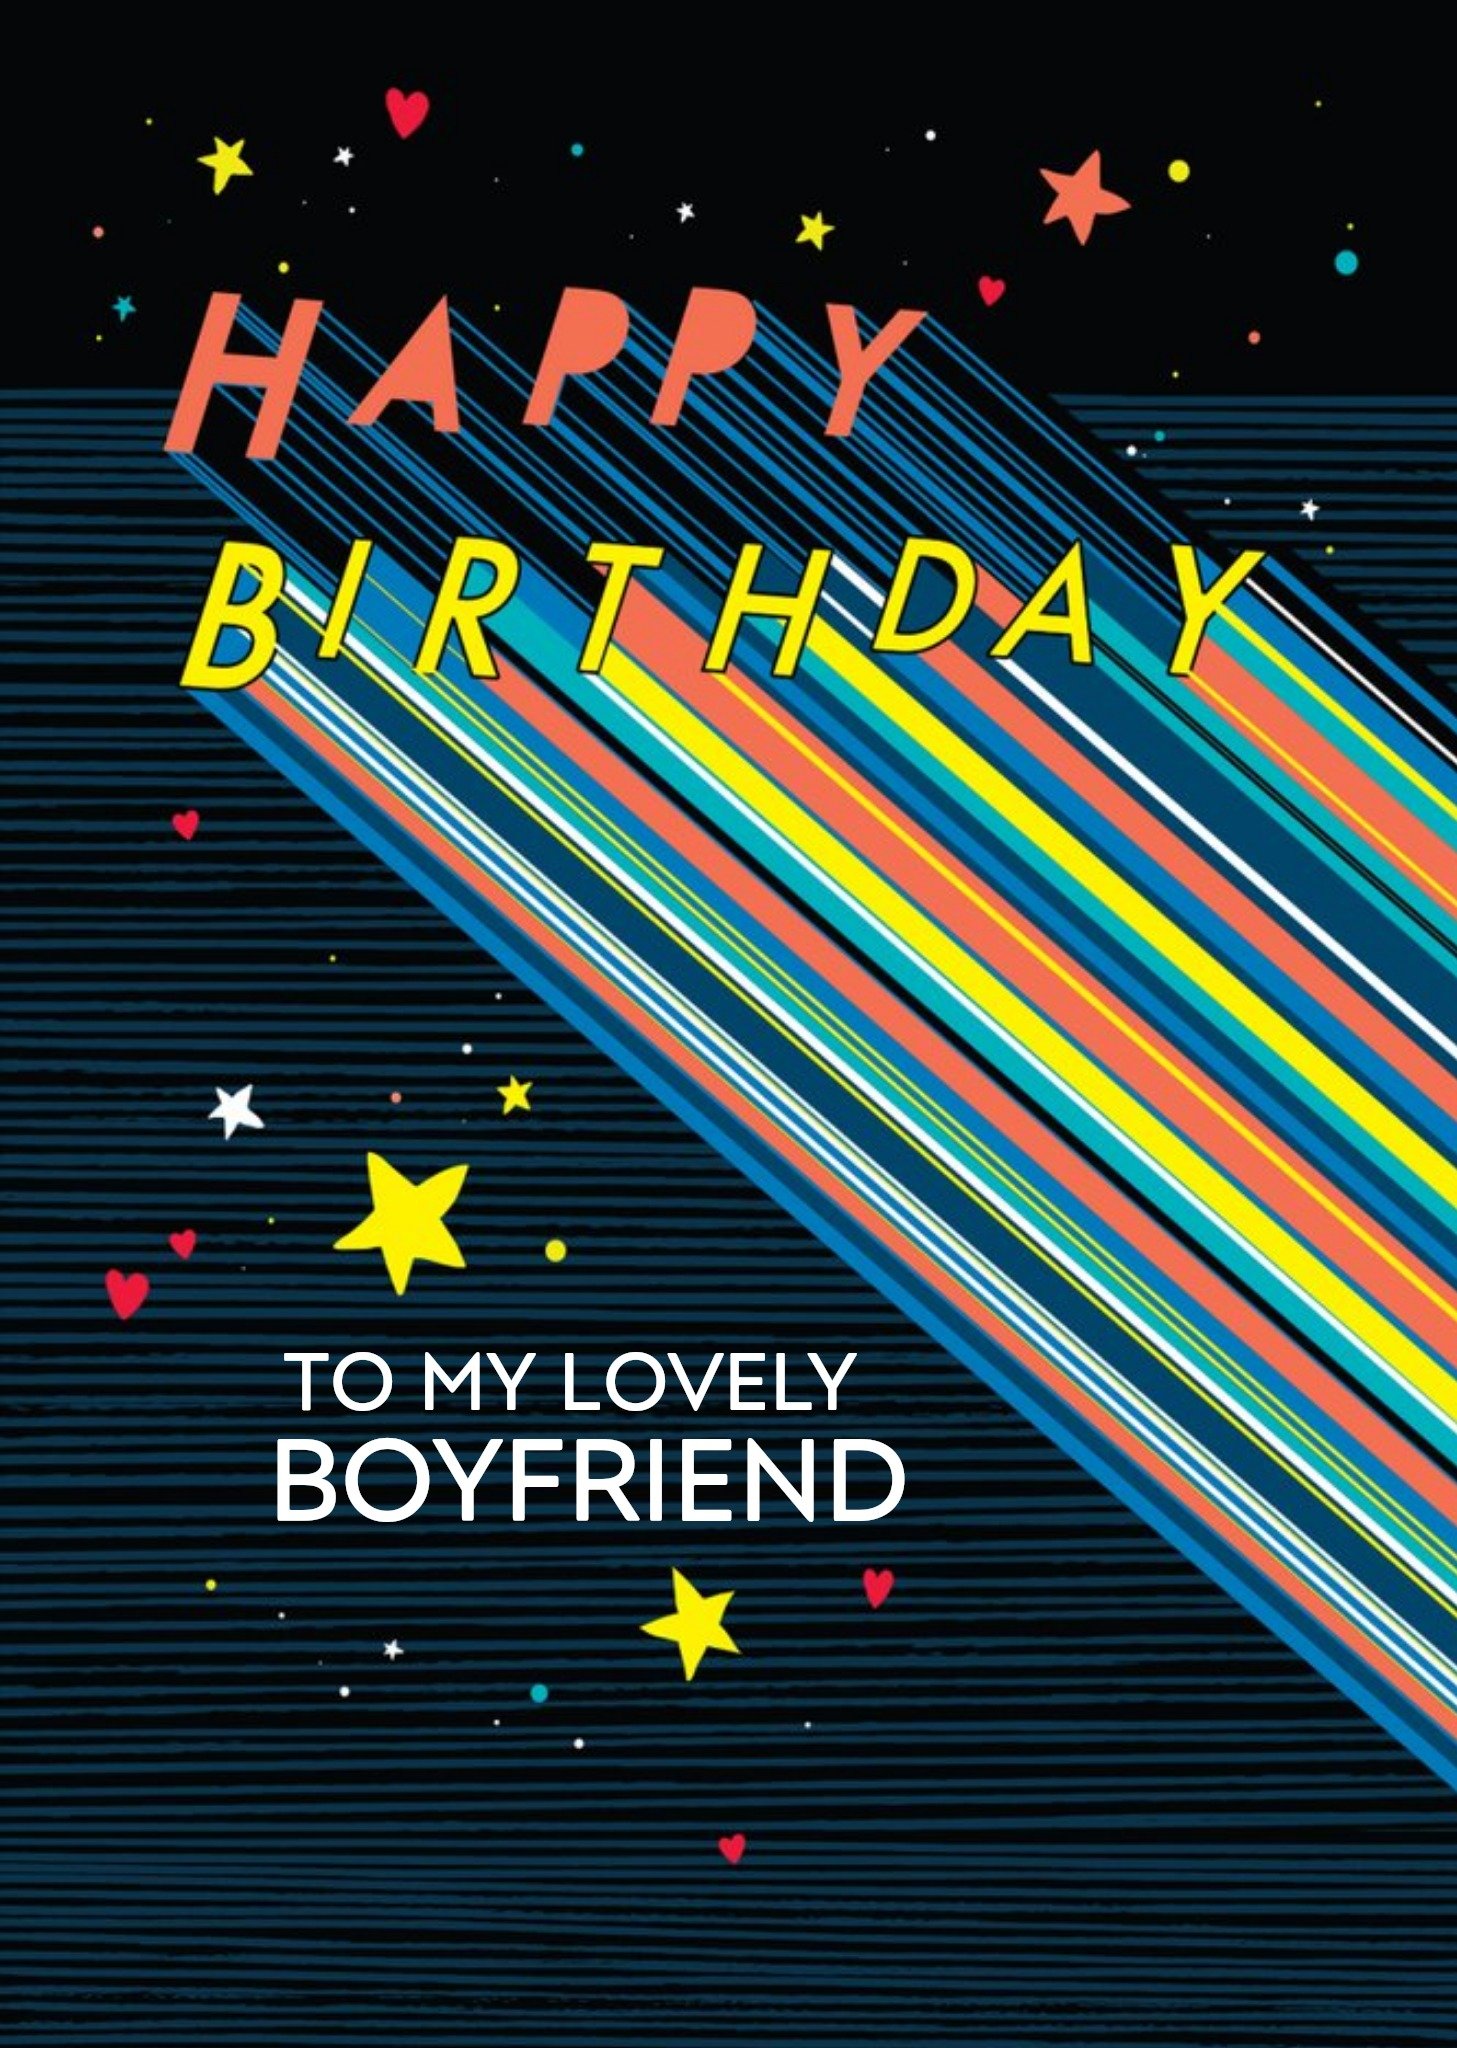 Moonpig Axel To My Lovely Boyfriend Typographic Birthday Card Ecard